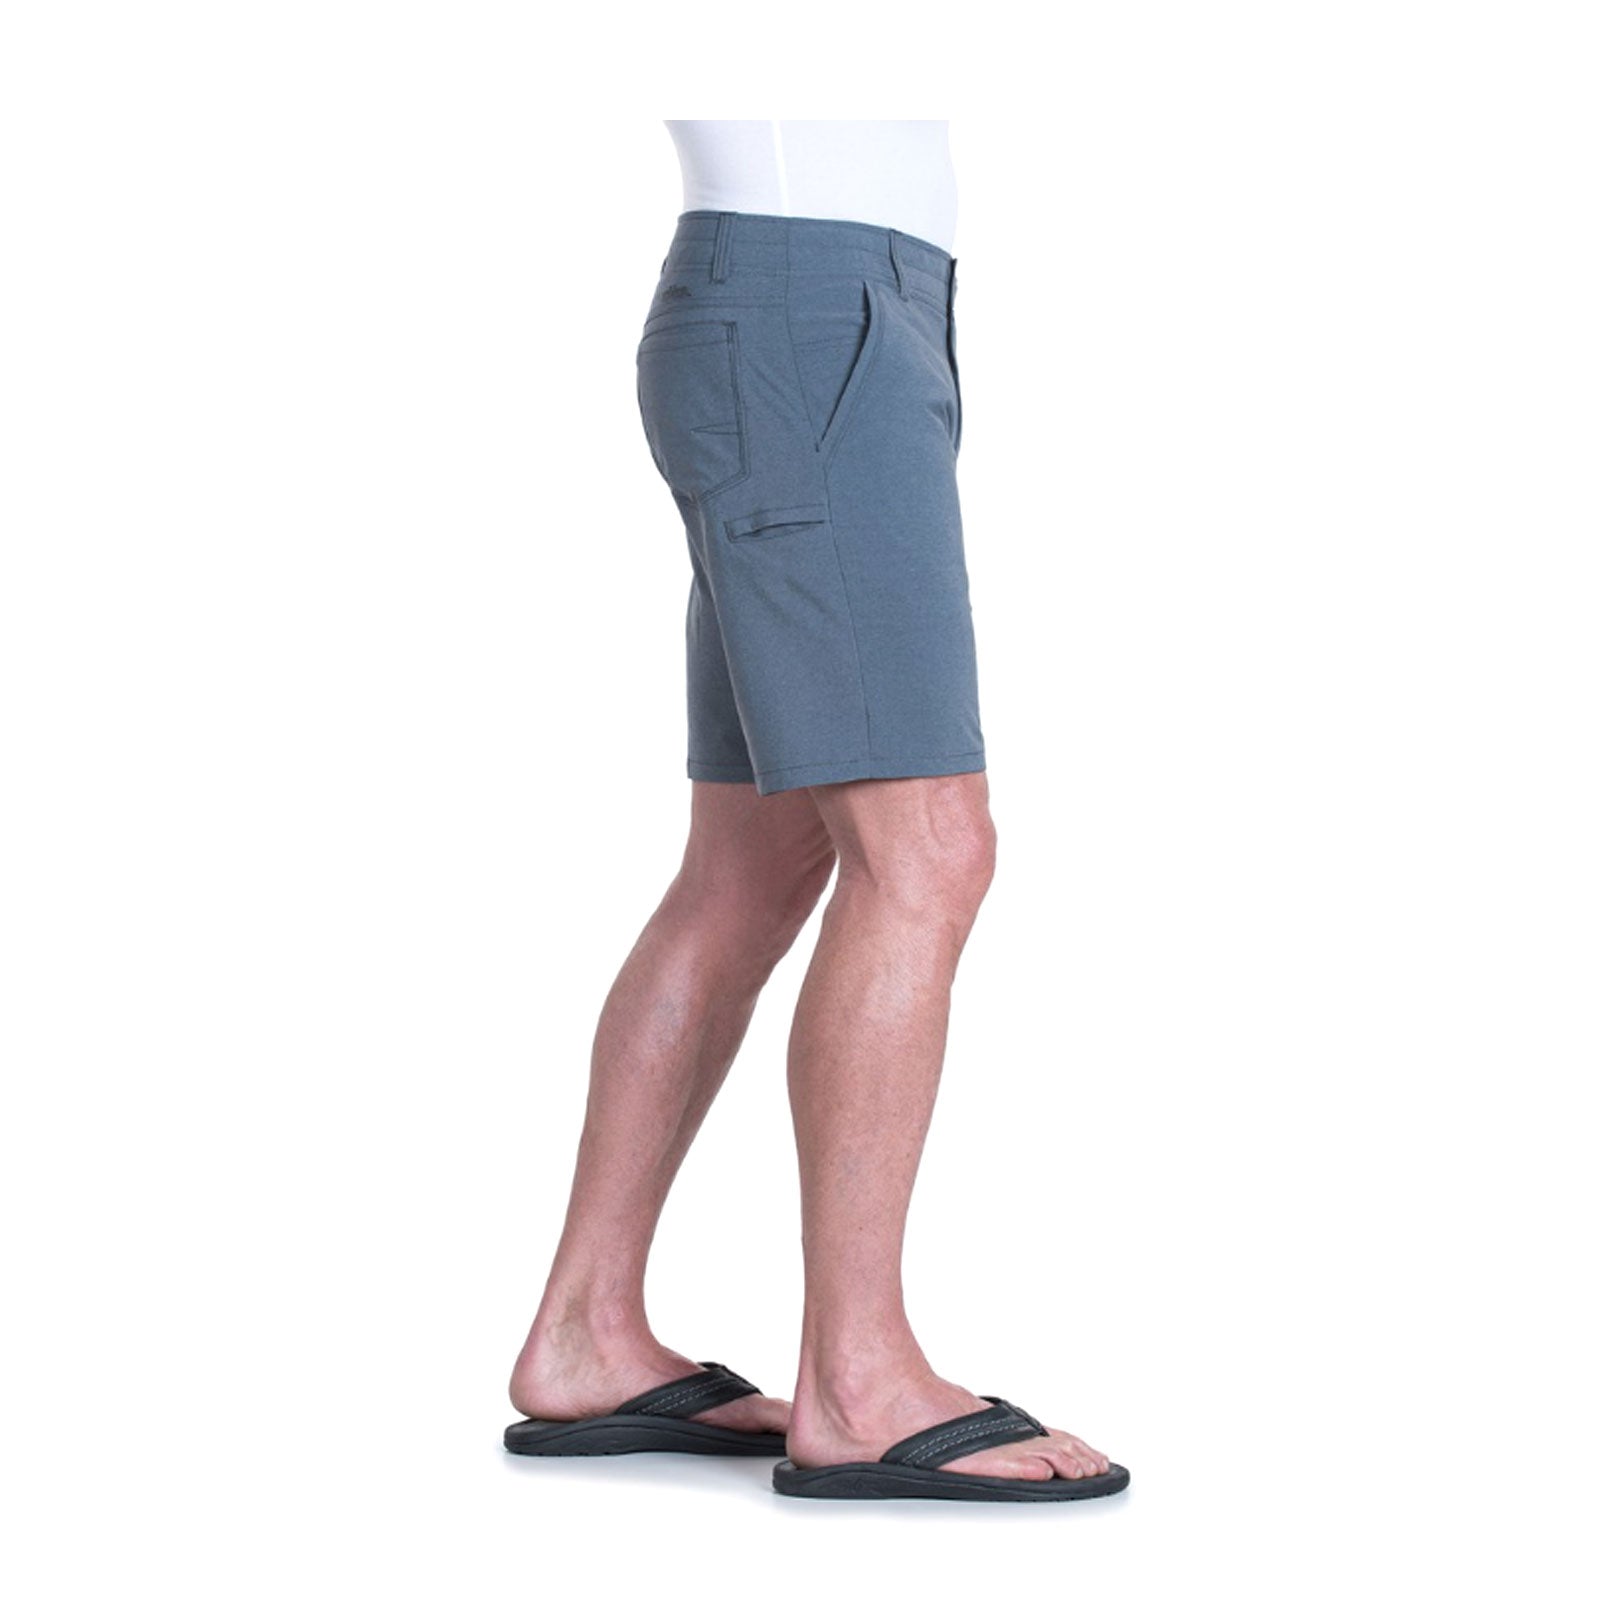 Kuhl Shift Amphibia Short (Men) - Pirate Blue Outerwear - Legwear - Shorts - The Heel Shoe Fitters